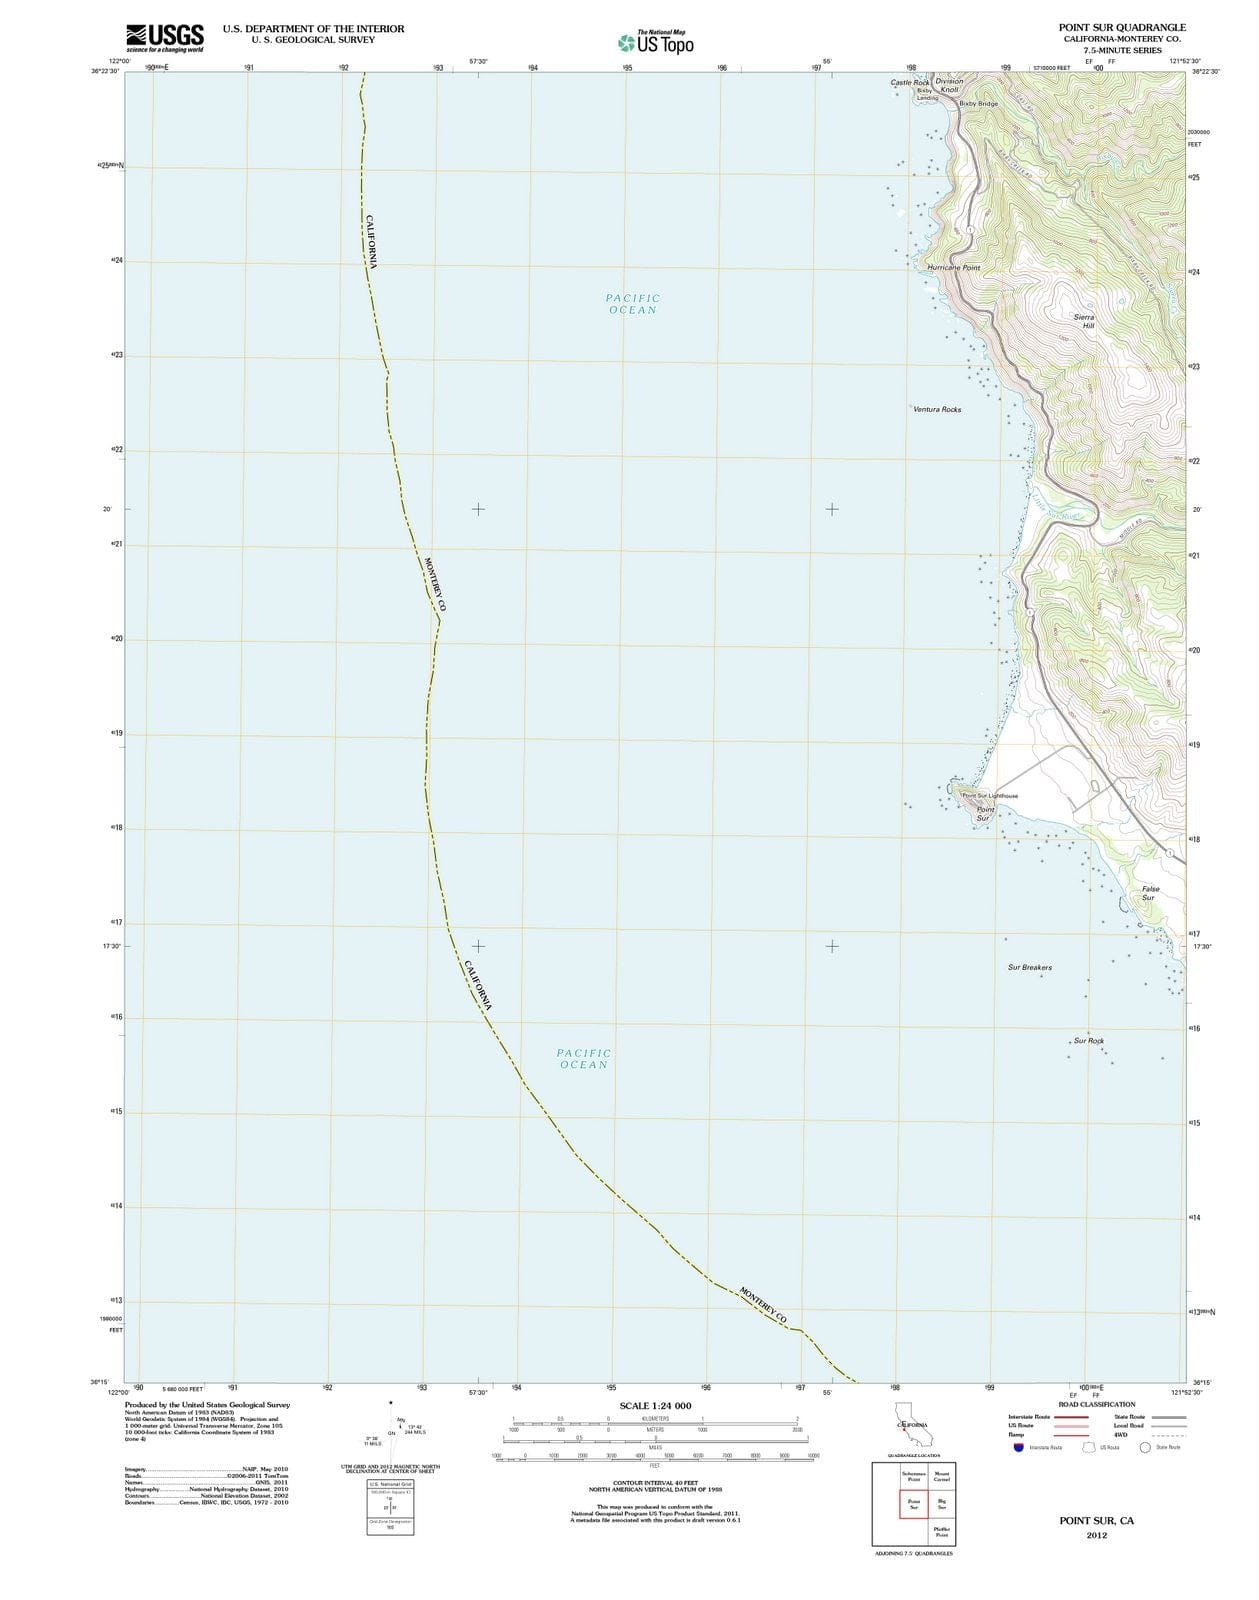 2012 Point Sur, CA - California - USGS Topographic Map